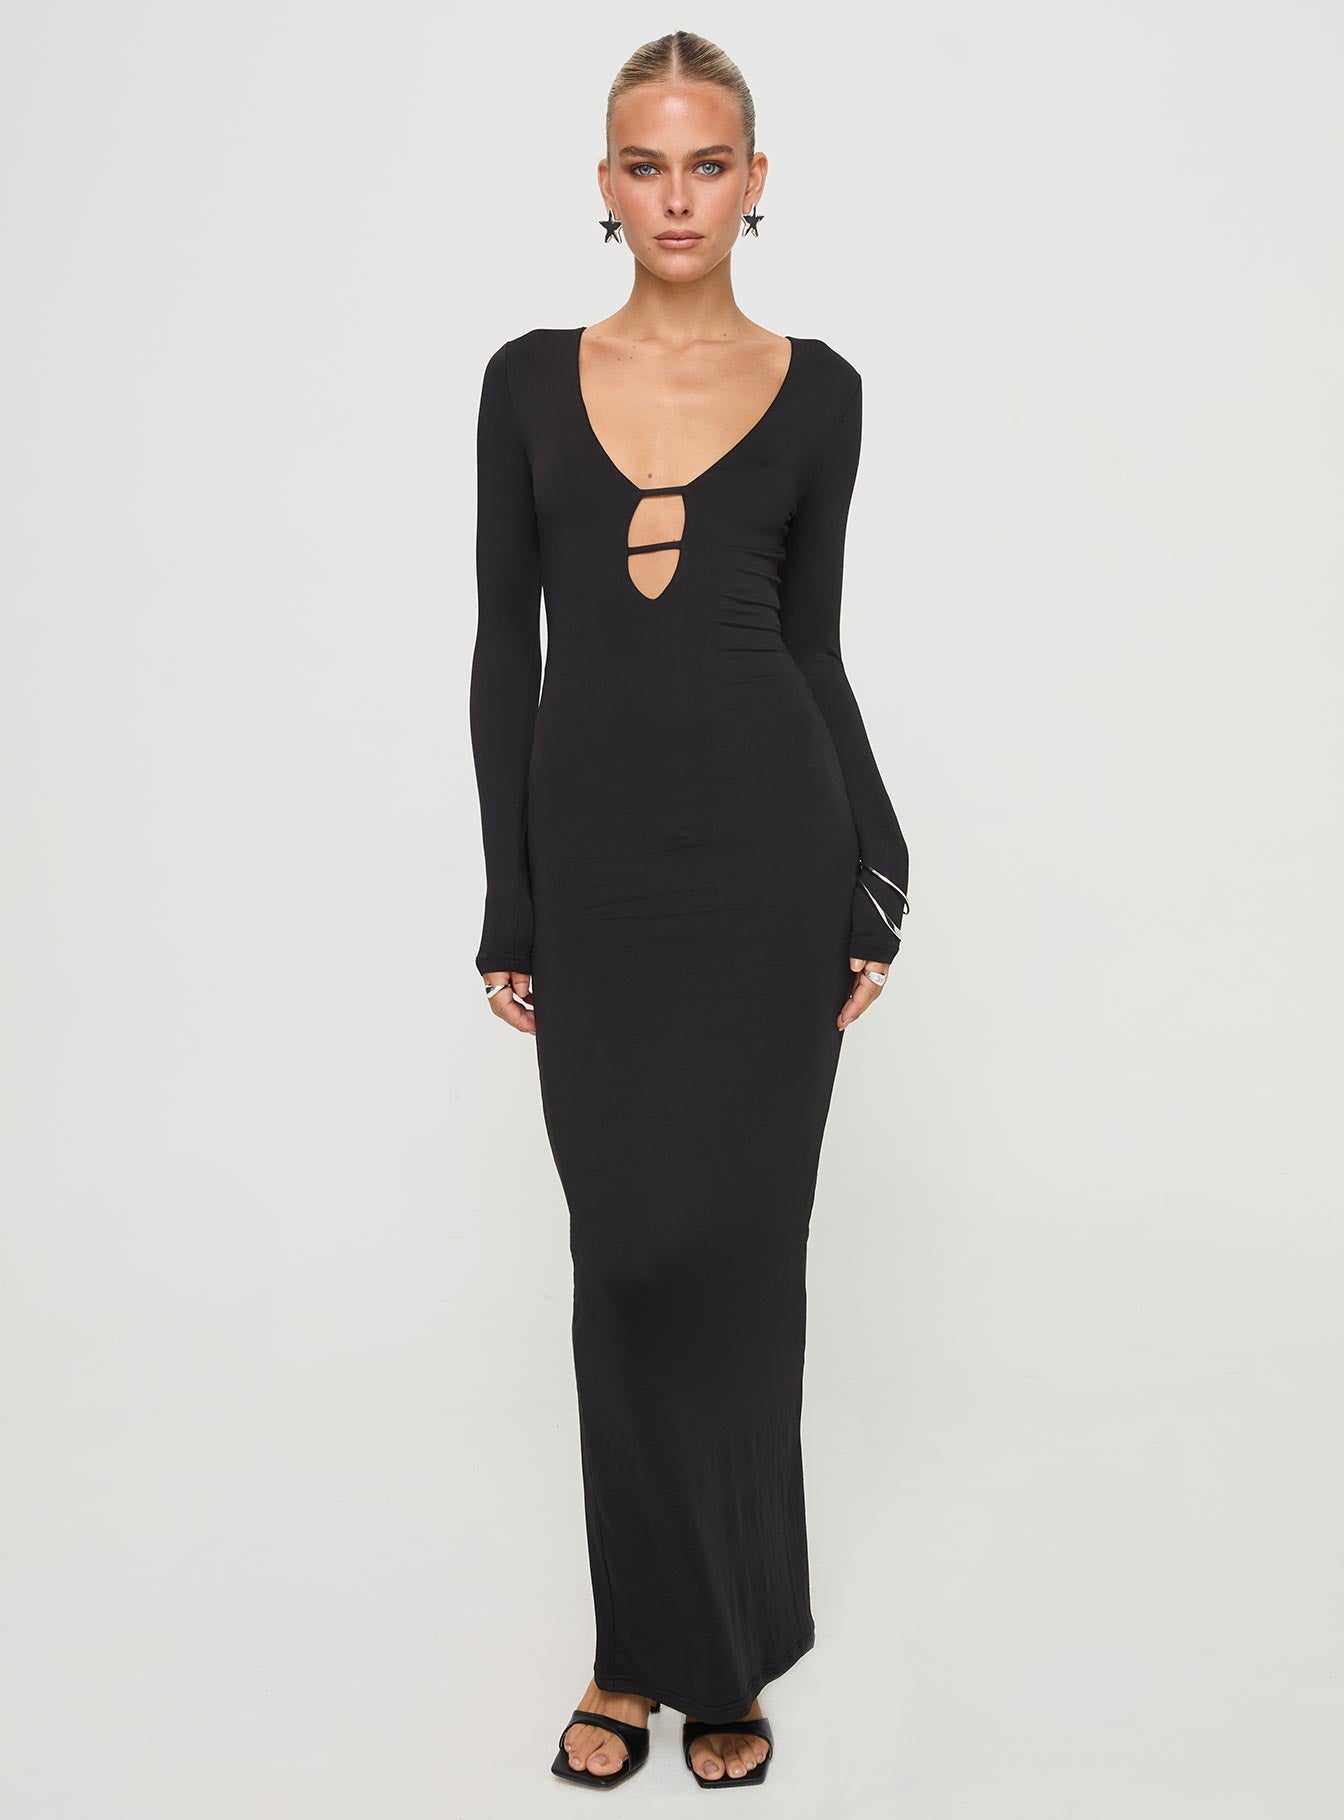 Shop Formal Dress - Lasan Long Sleeve Maxi Dress Black sixth image